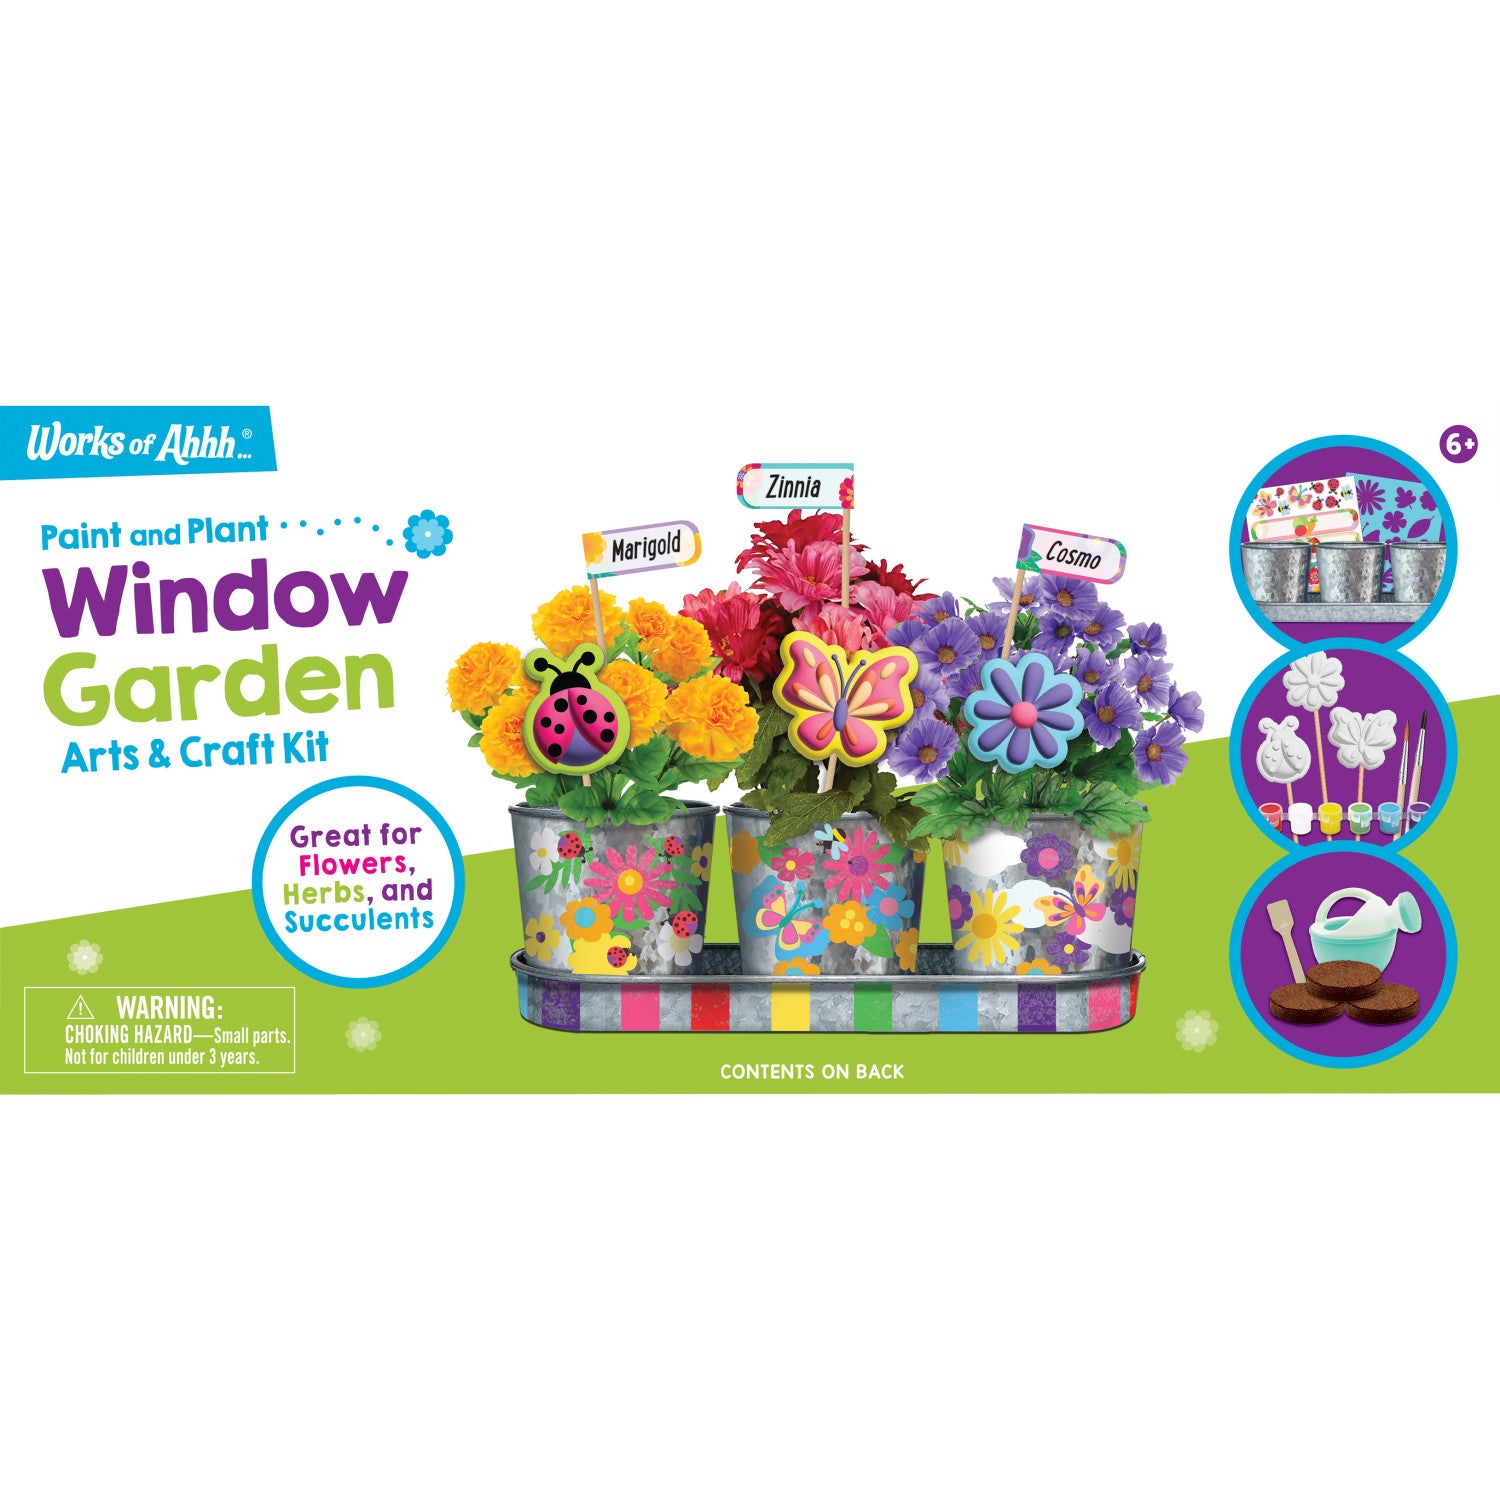 Window Garden Arts & Craft Kit